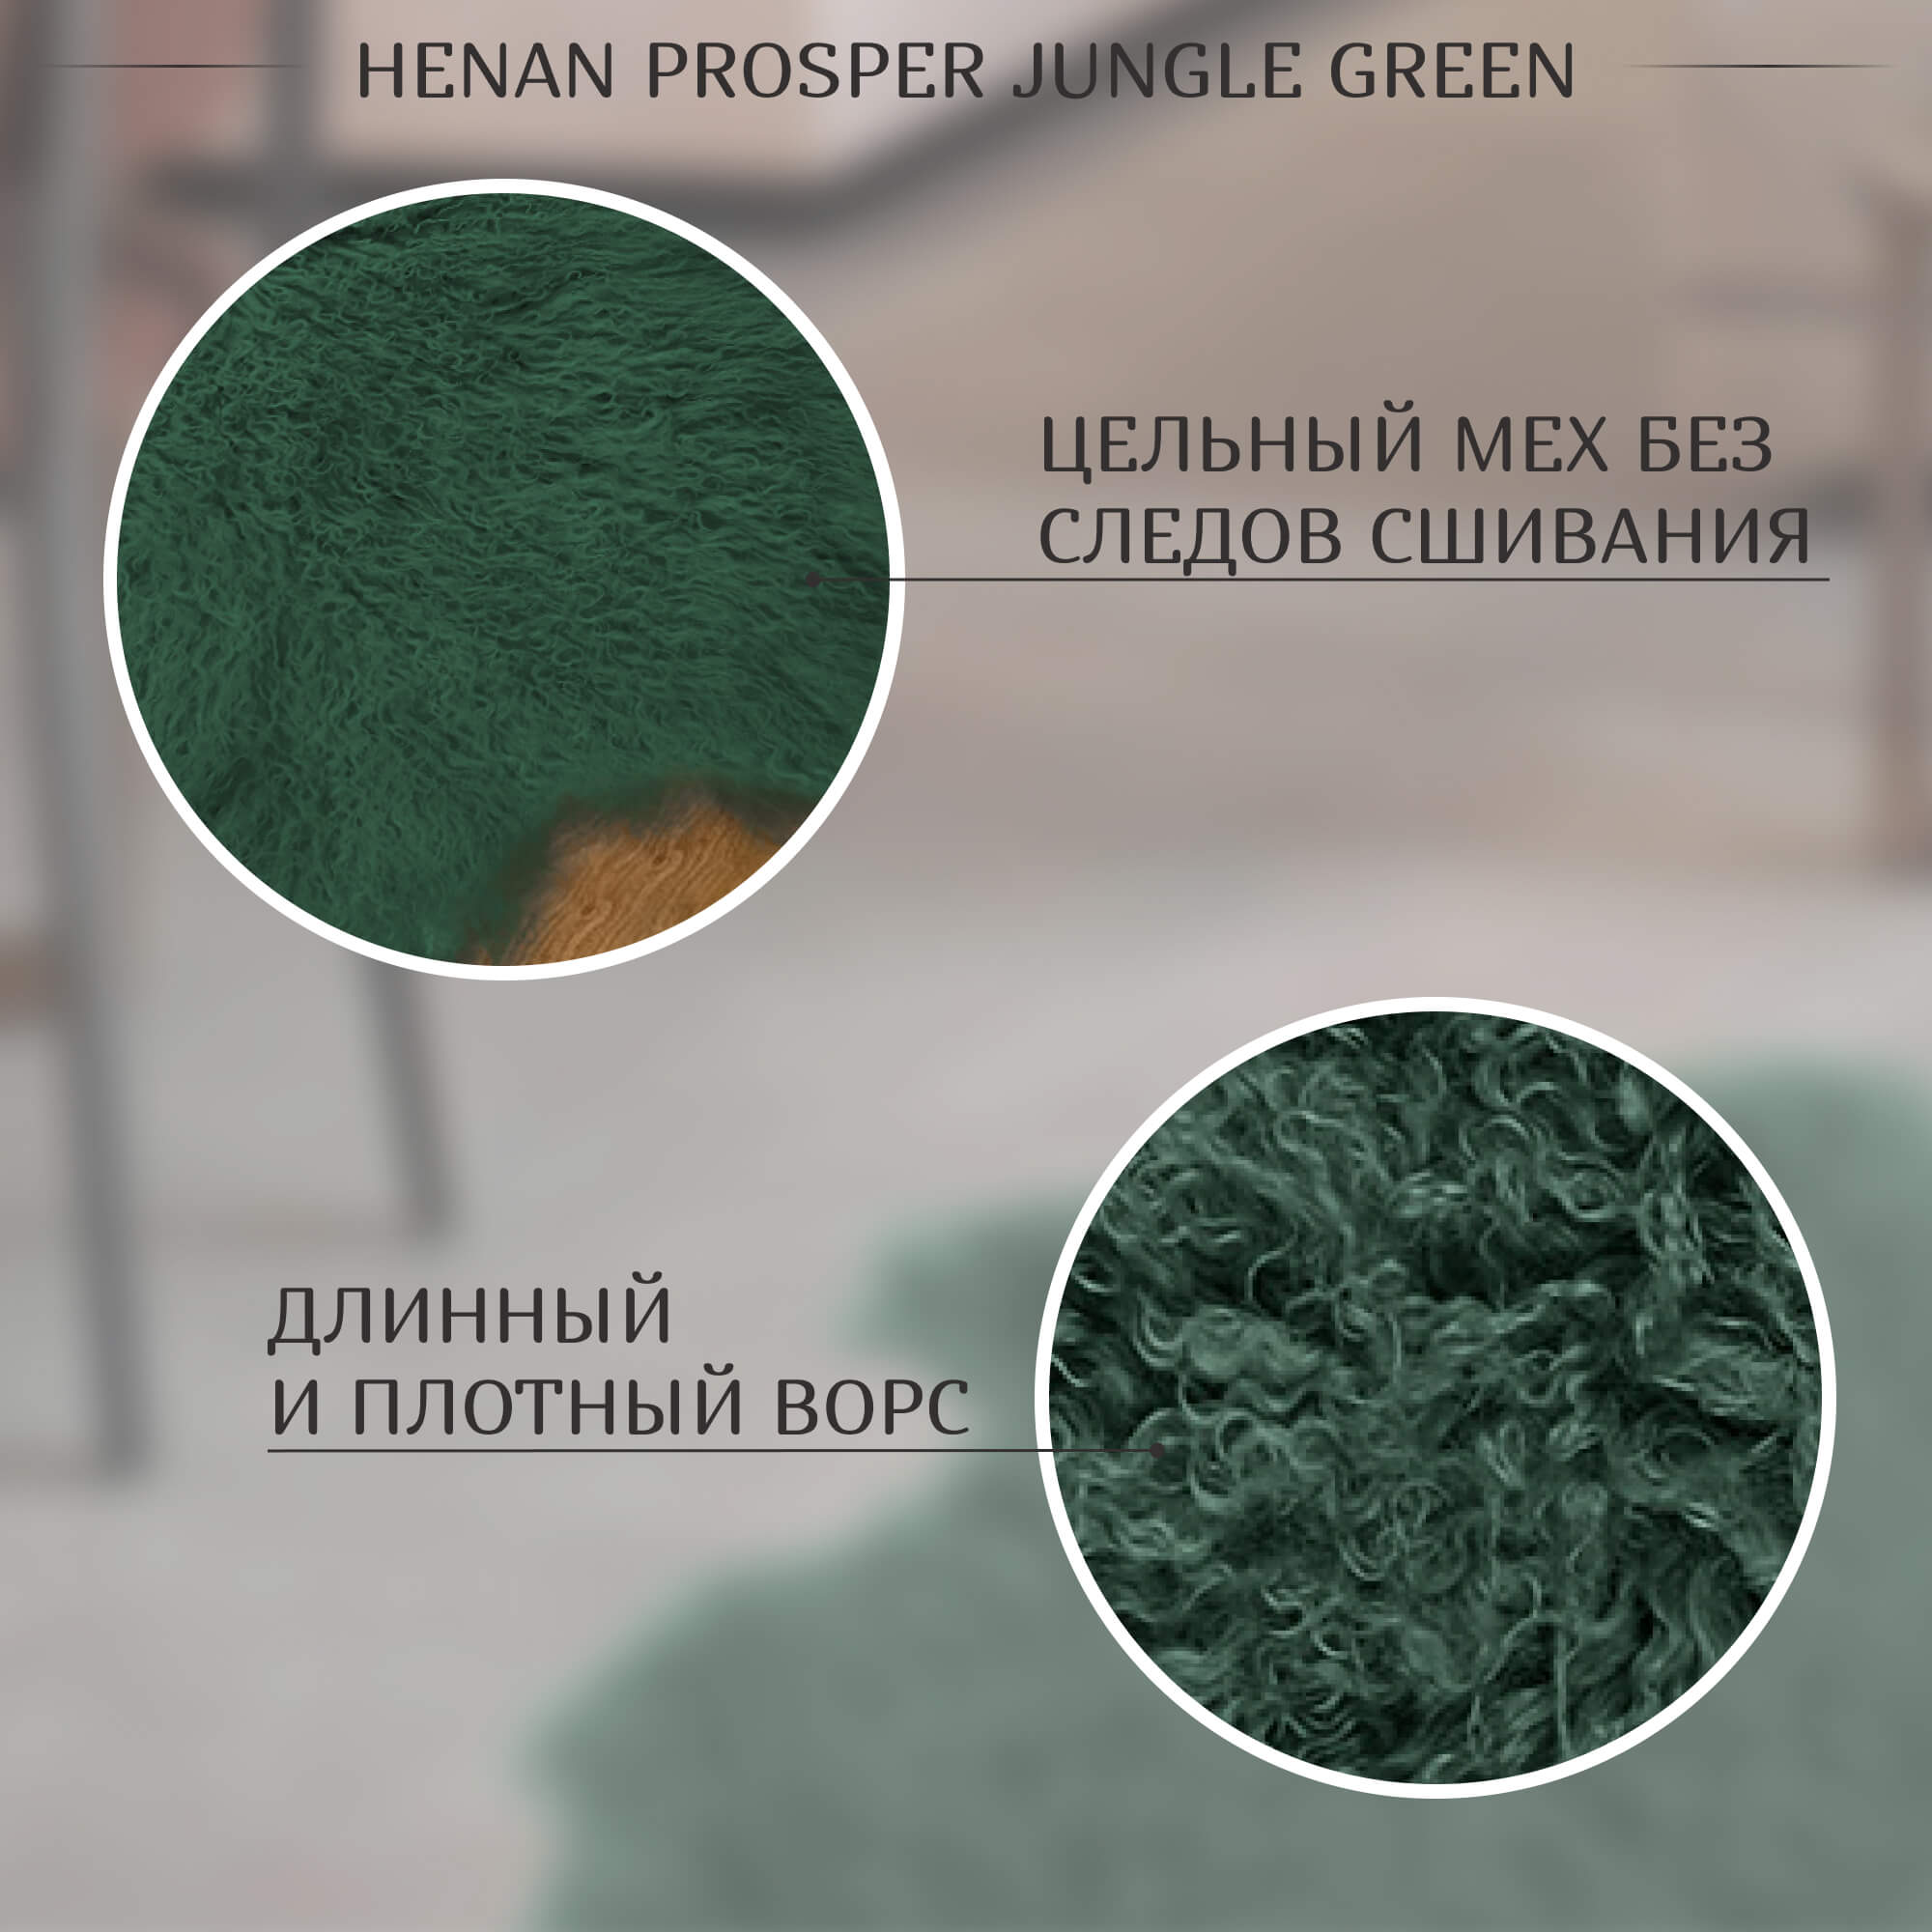 Коврик Henan Prosper jungle green 90 см ворс 80 мм, цвет темно-зеленый - фото 3